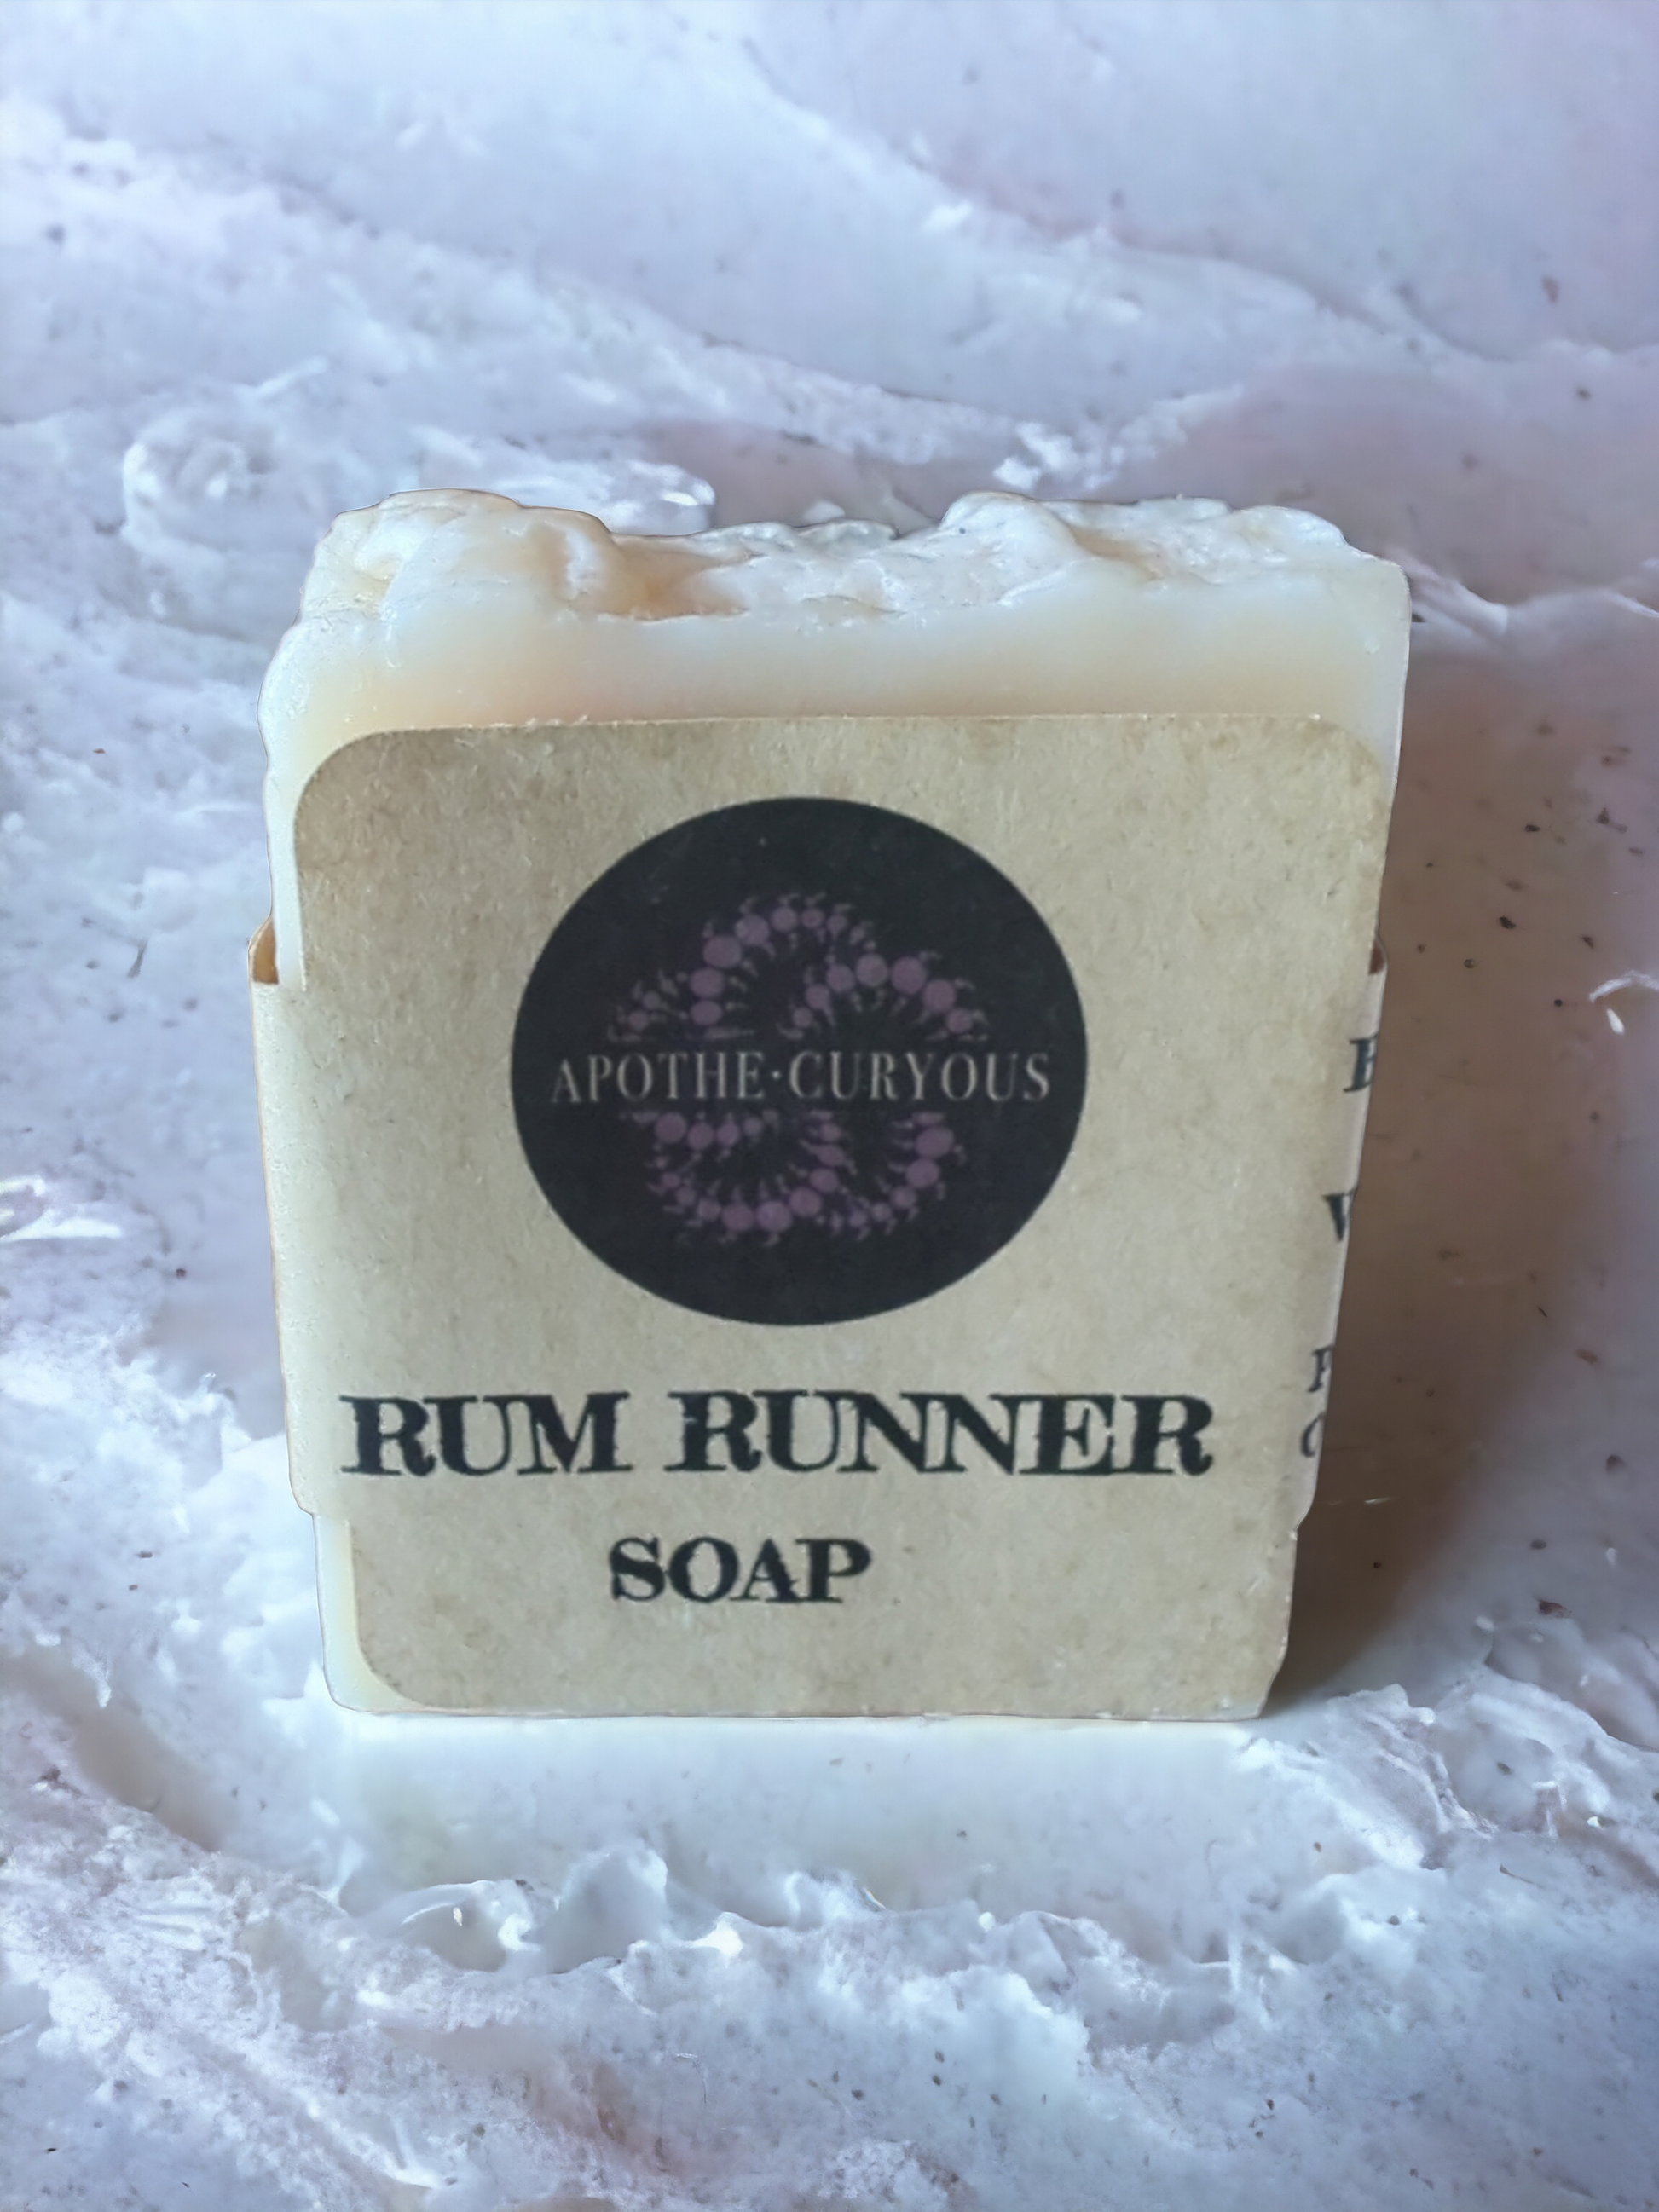 Rum Runner soap, Apothecuryous